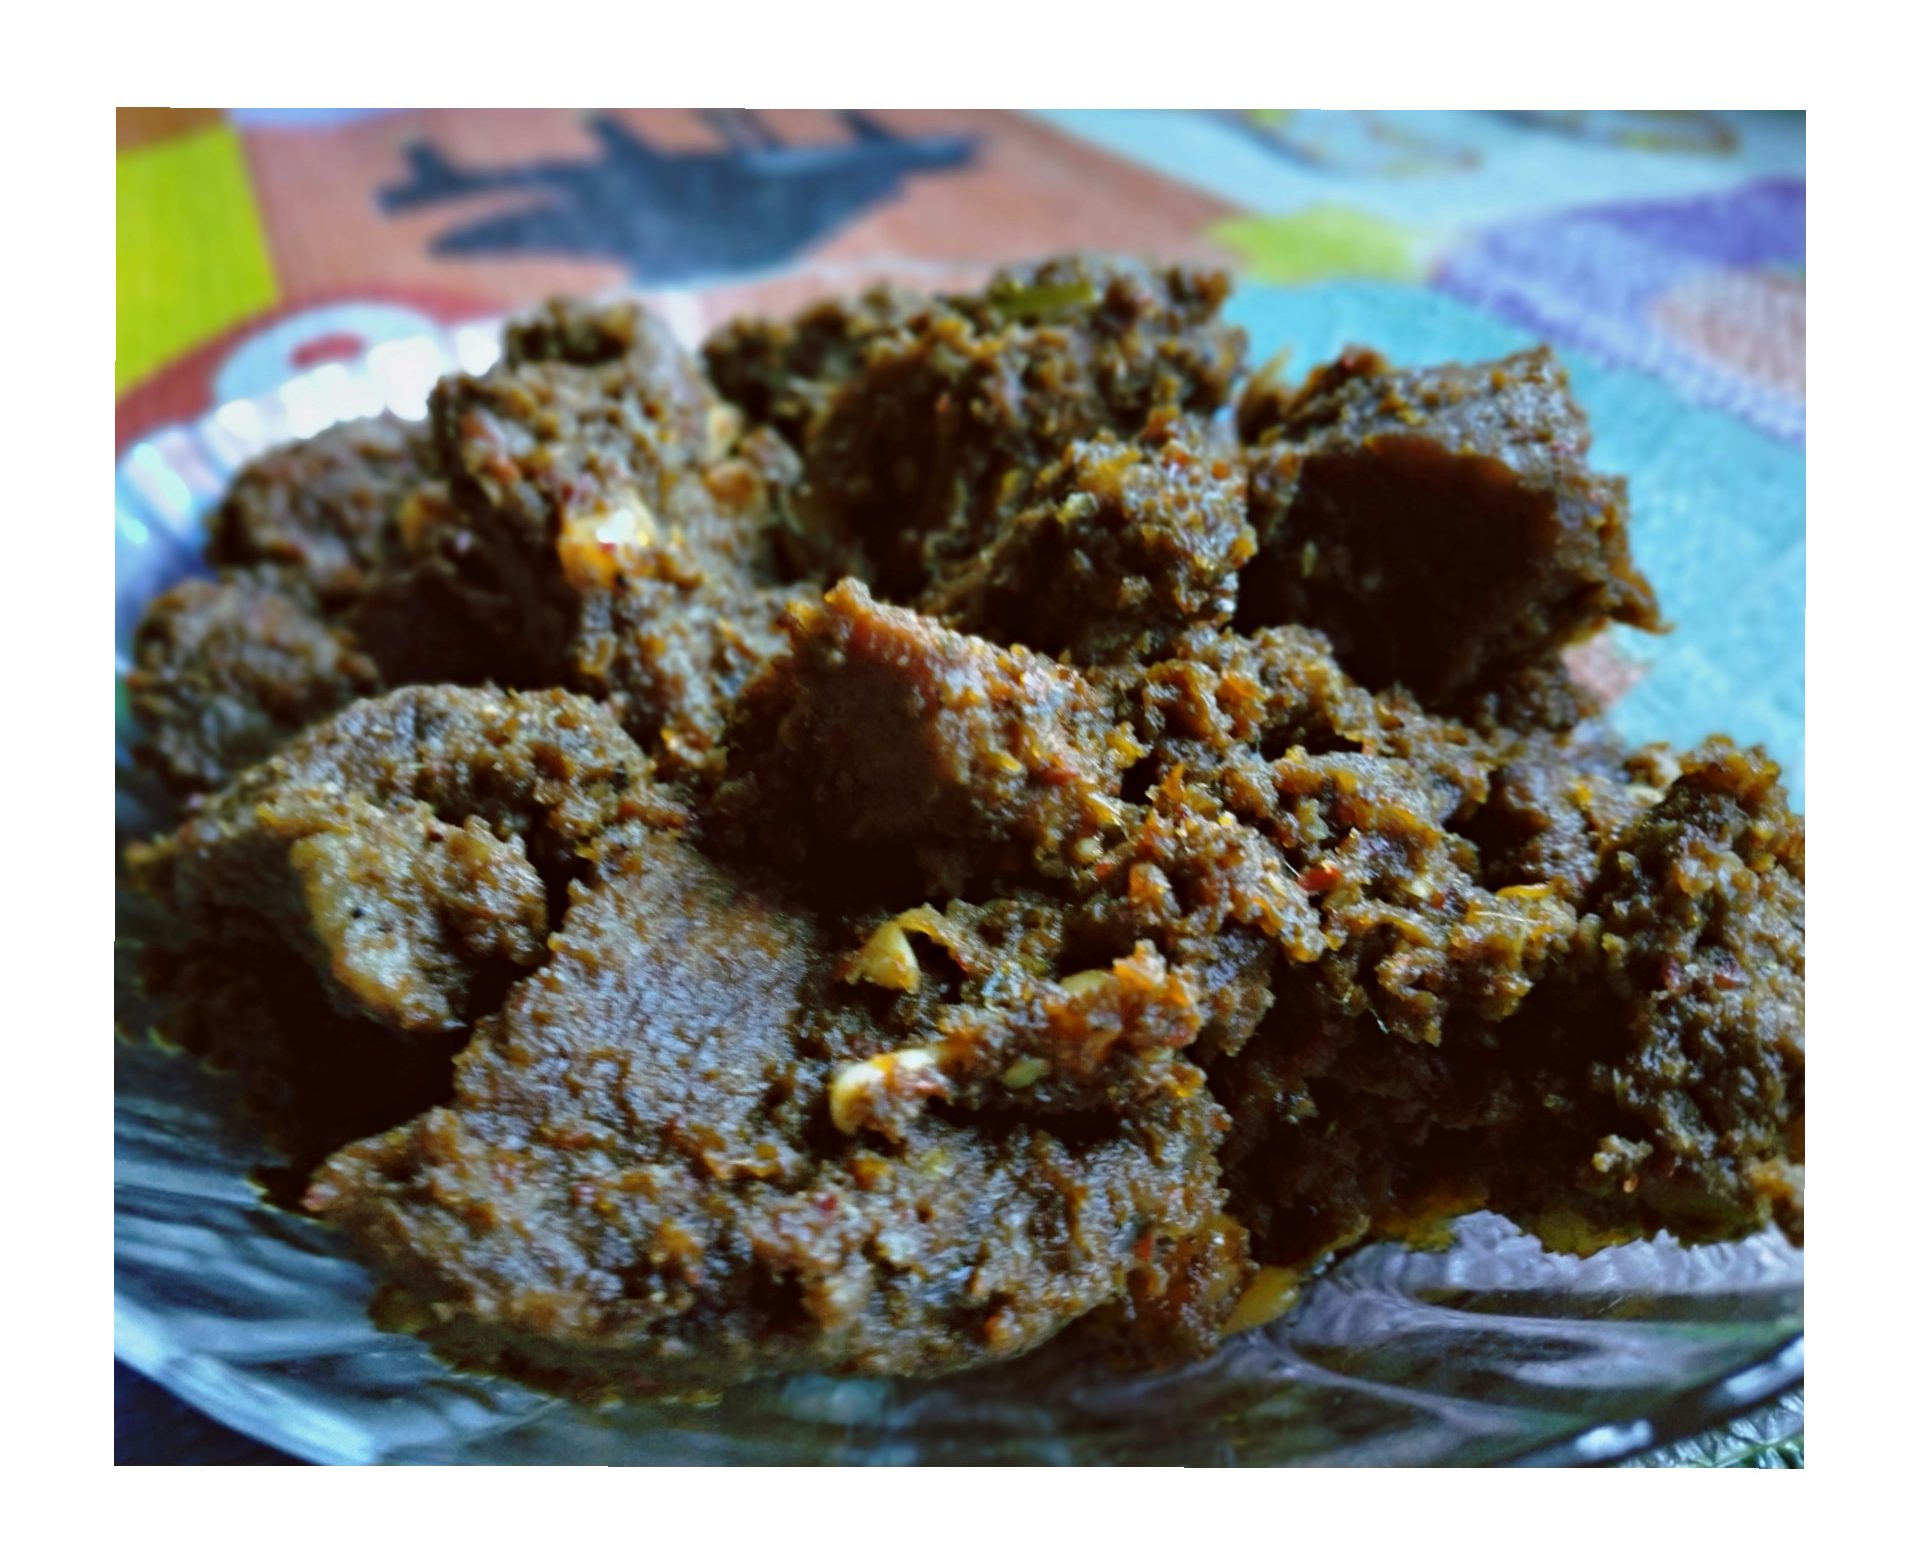 Marandang, demikian orang Minang menyebut proses pembuatan daging berkuah kering berwarna cokelat tua dan pekat kehitaman, kemudian disebut Randang. | Kariadil Harefa/Halonusa.com